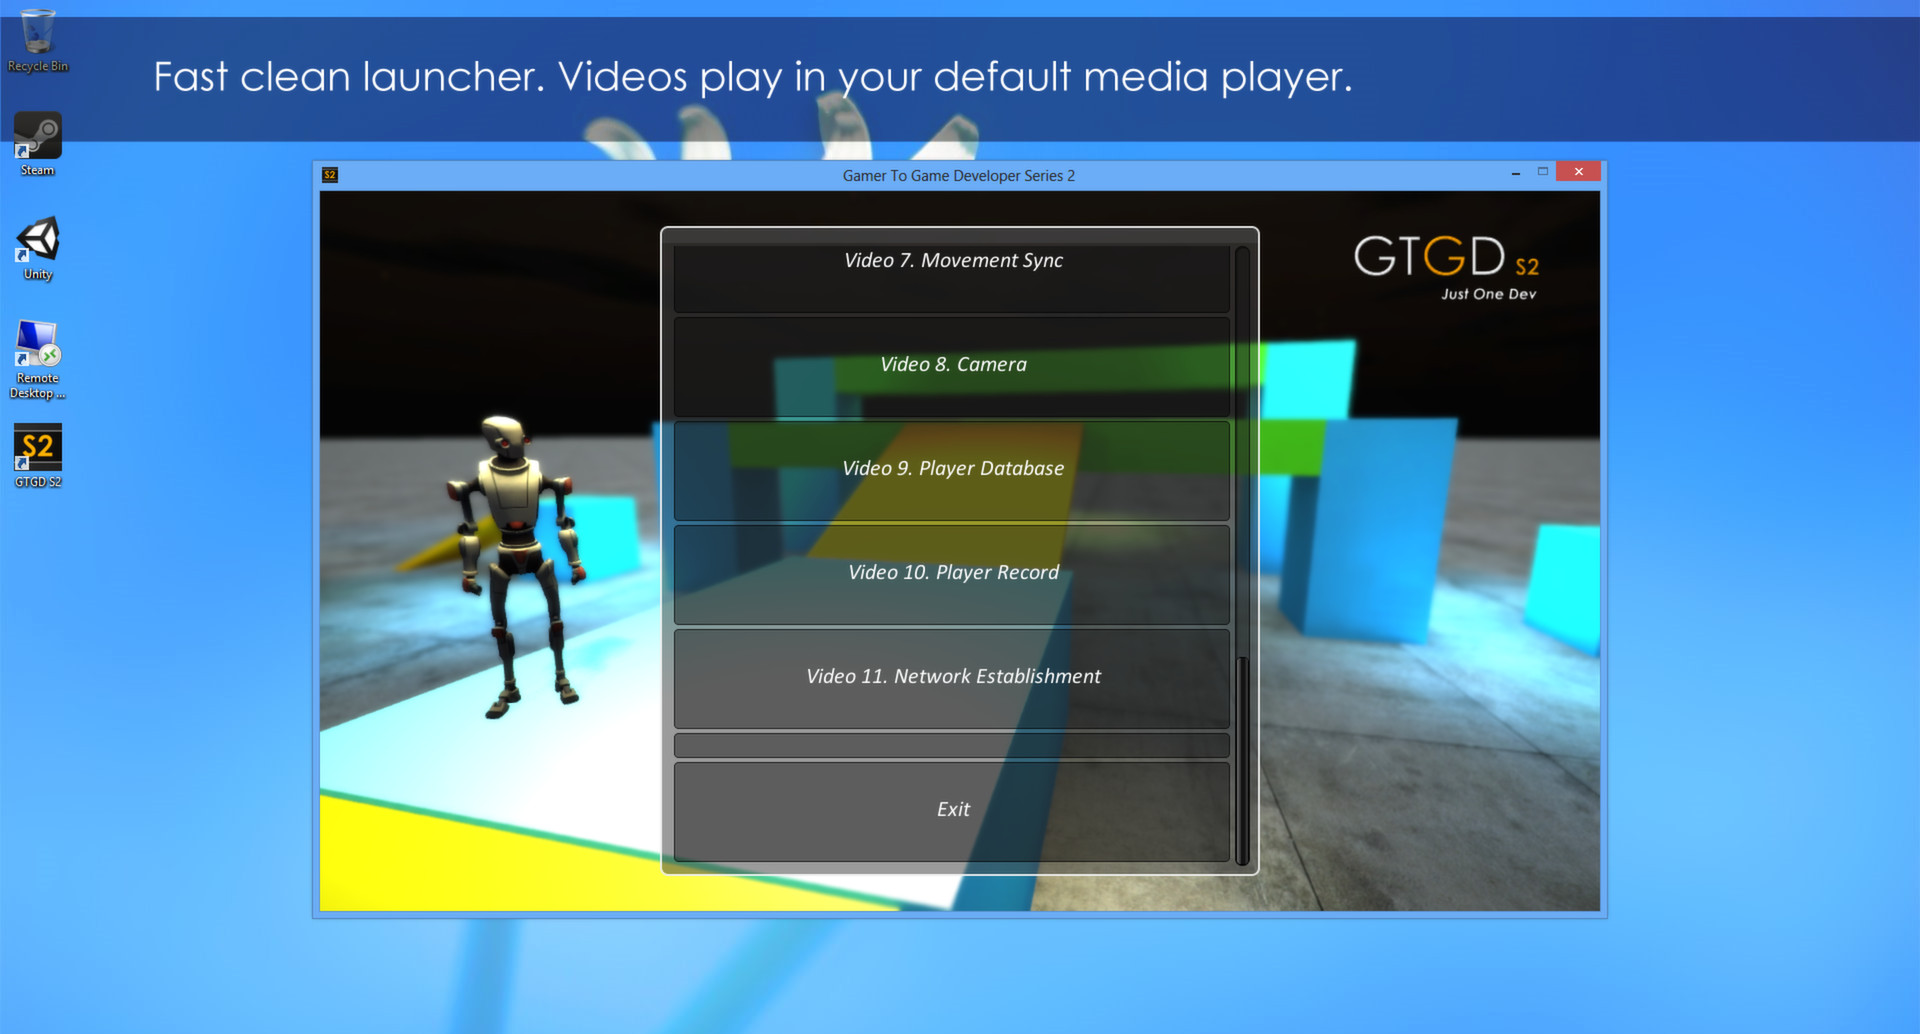 GTGD S2: Just One Dev screenshot